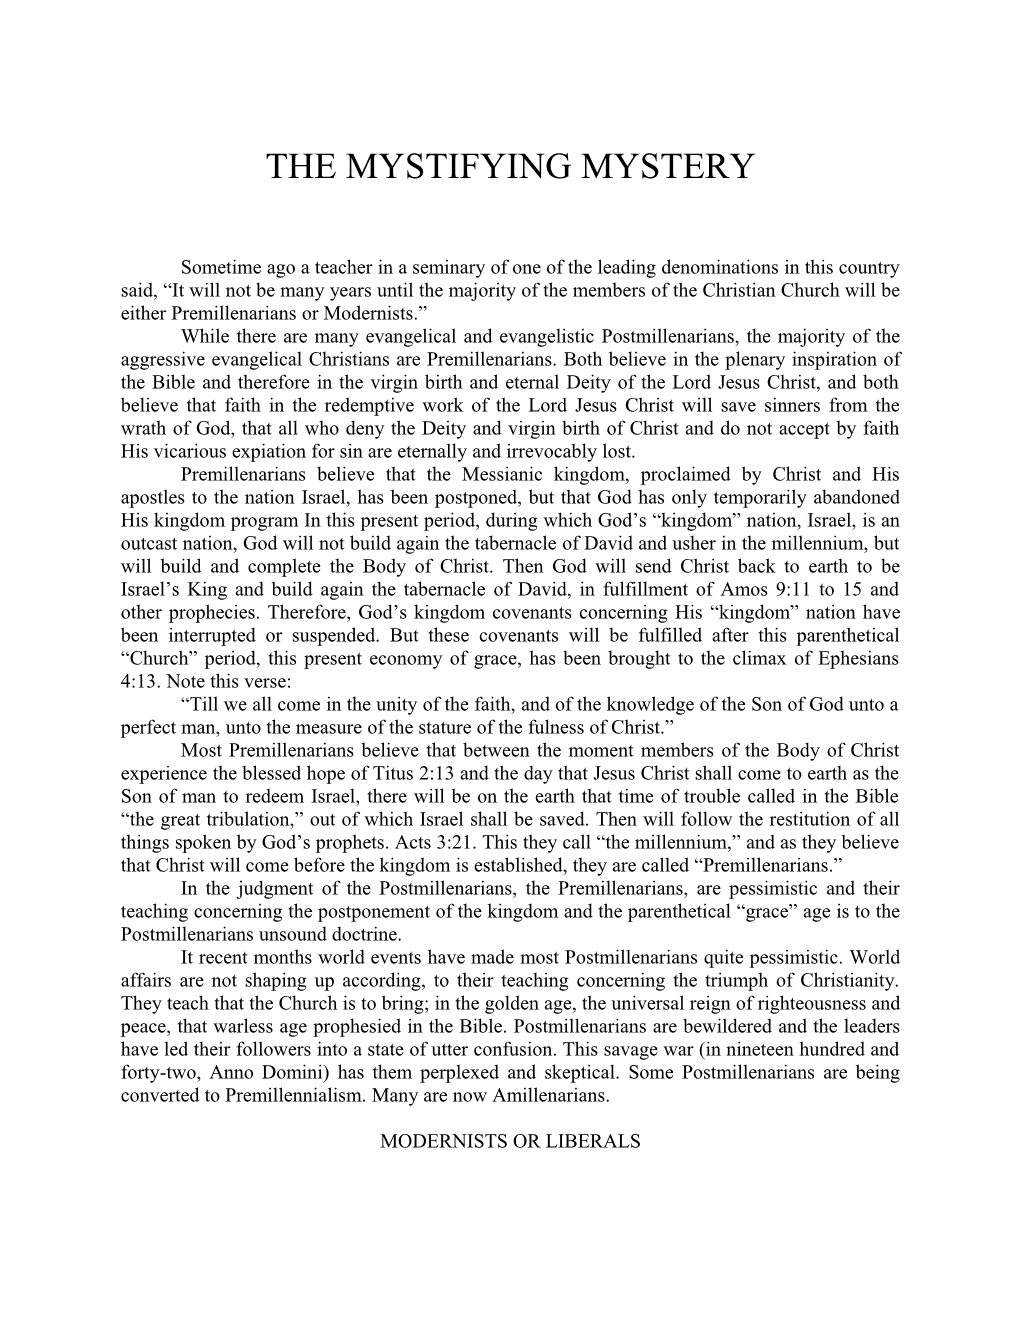 The Mystifying Mystery